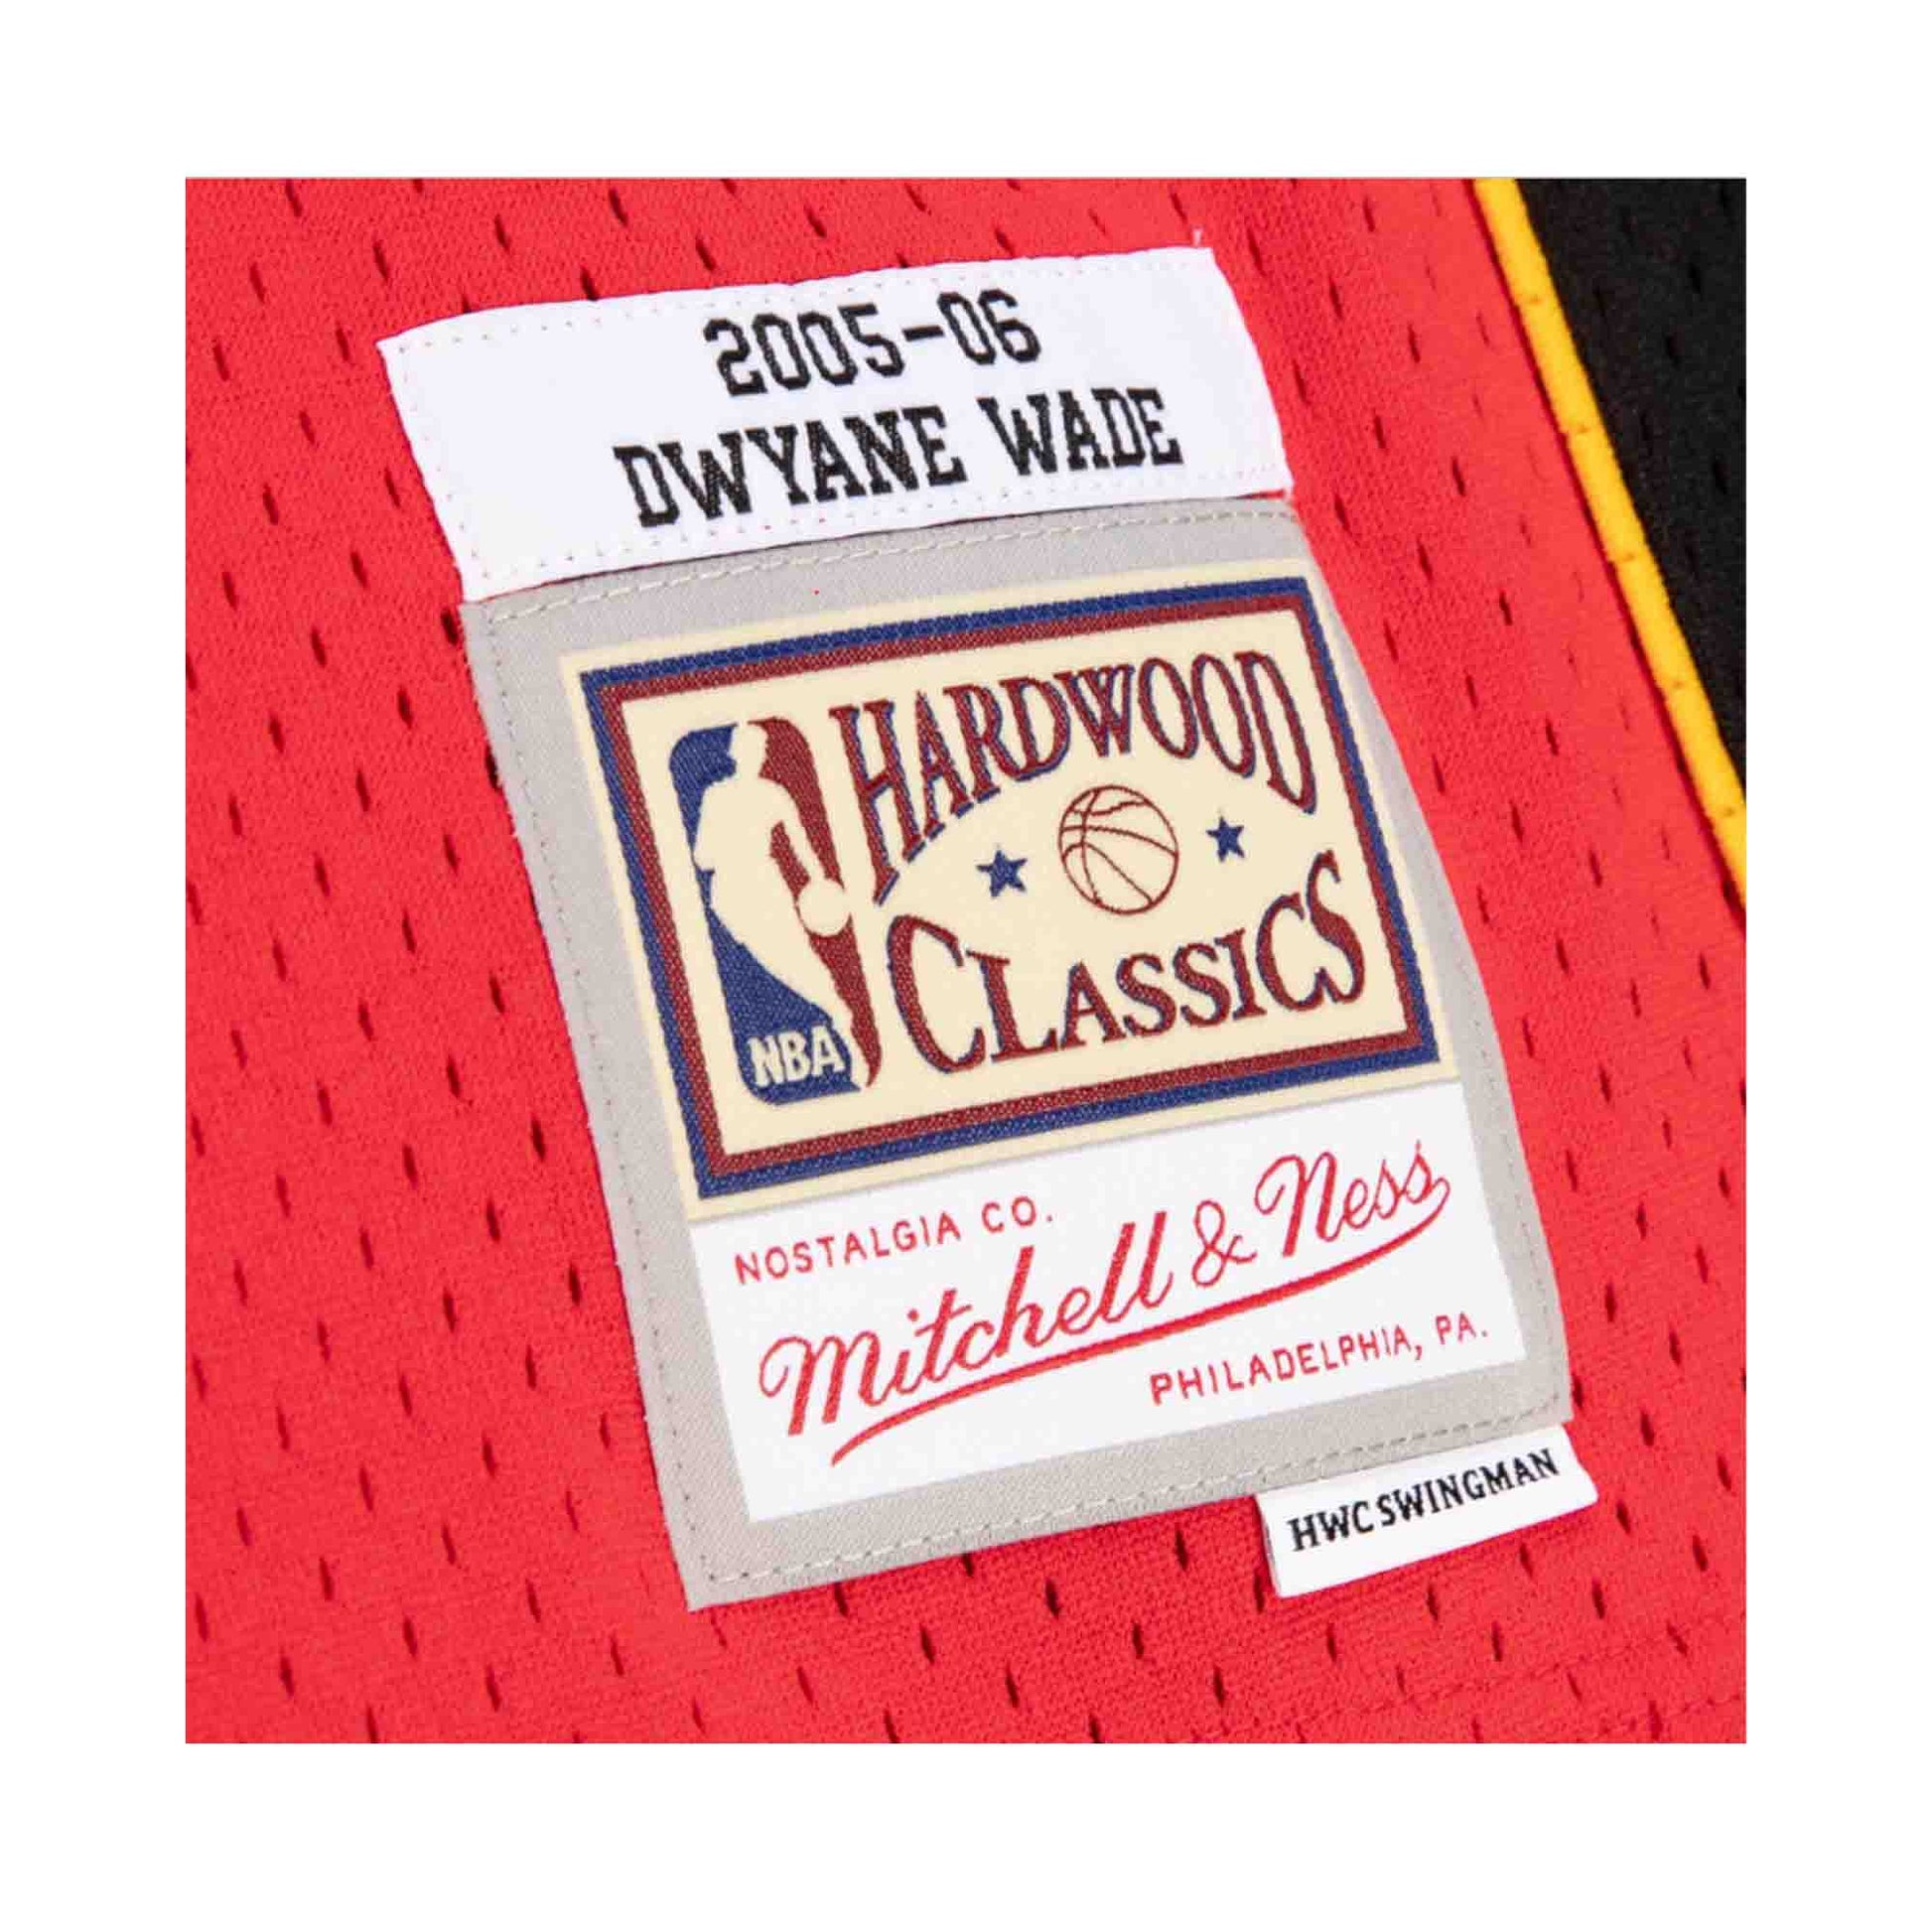 Men's Miami Heat Dwyane Wade Mitchell & Ness Red 2005-06 Hardwood Classics Swingman Jersey